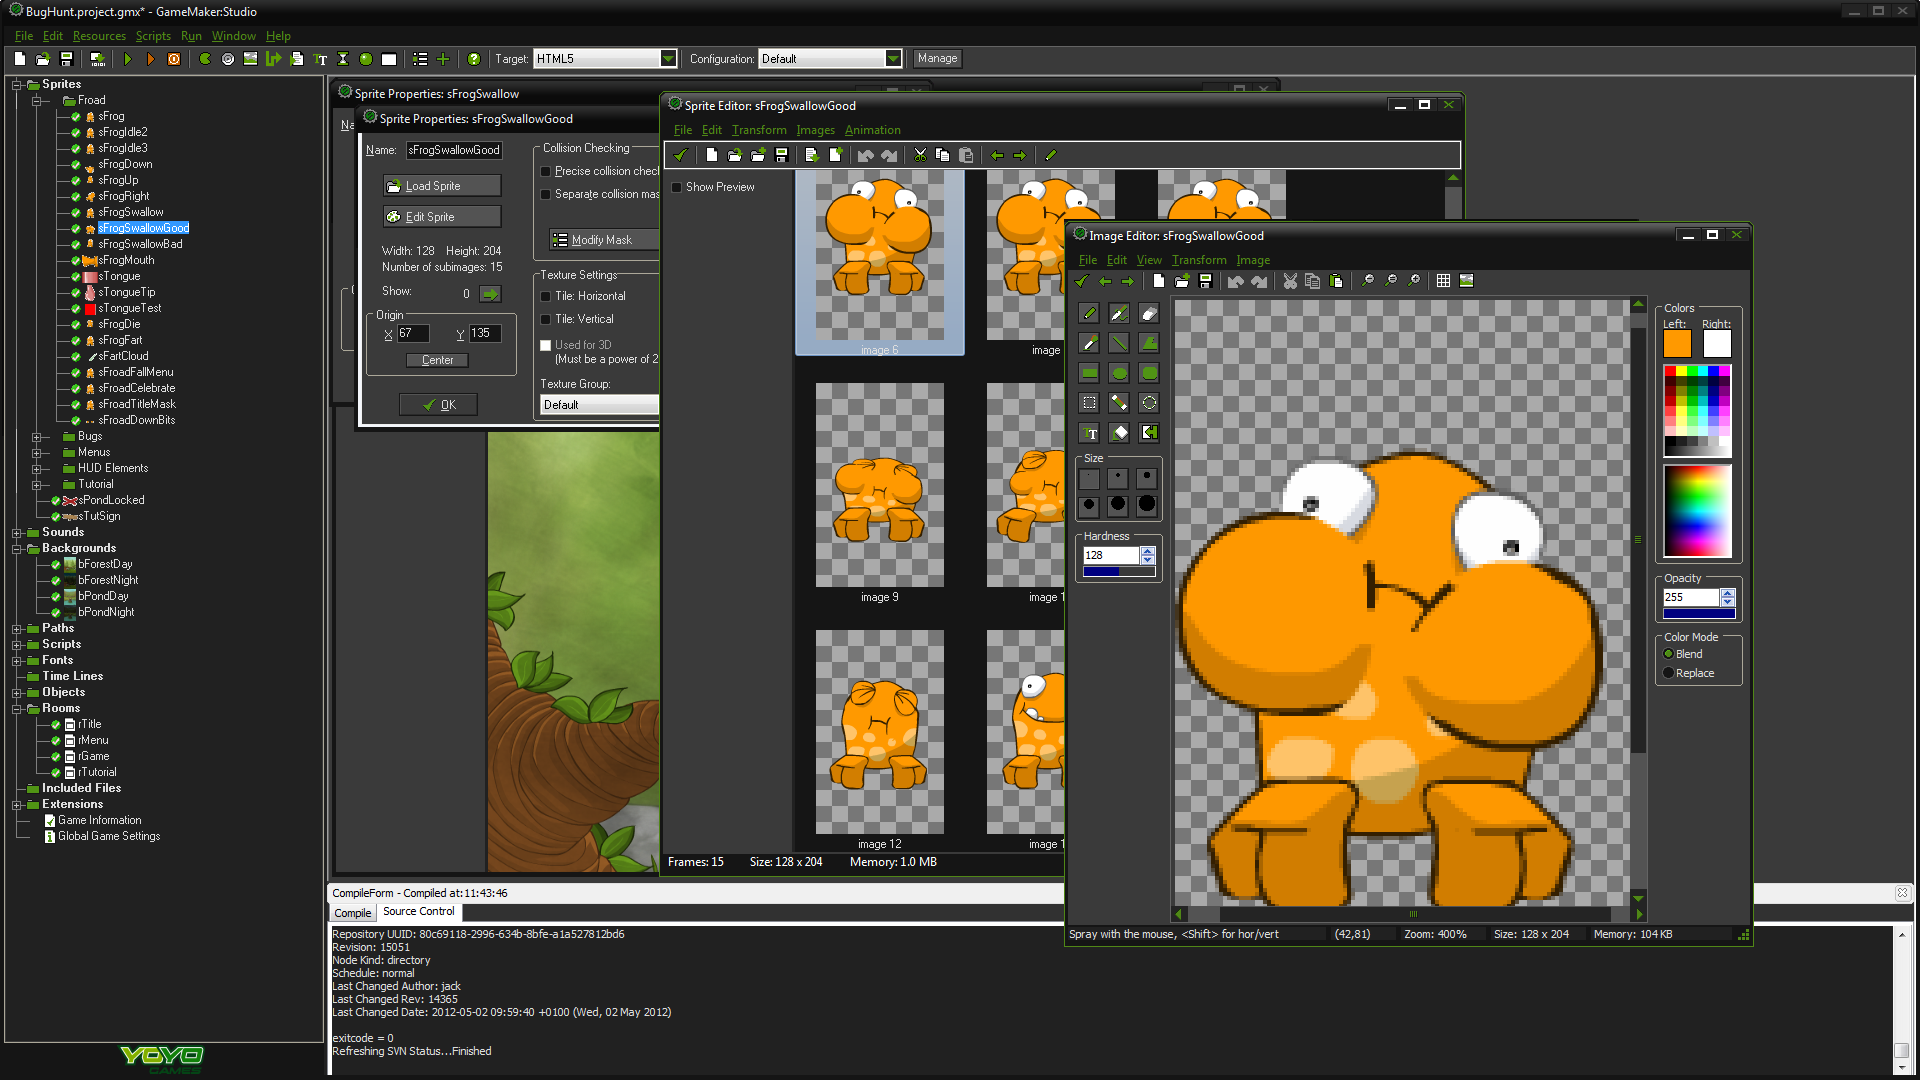 [VERIFIED] Gamemaker Studio 2 For Mac GameMaker-Studio_-Internal-Image-and-Animation-editing